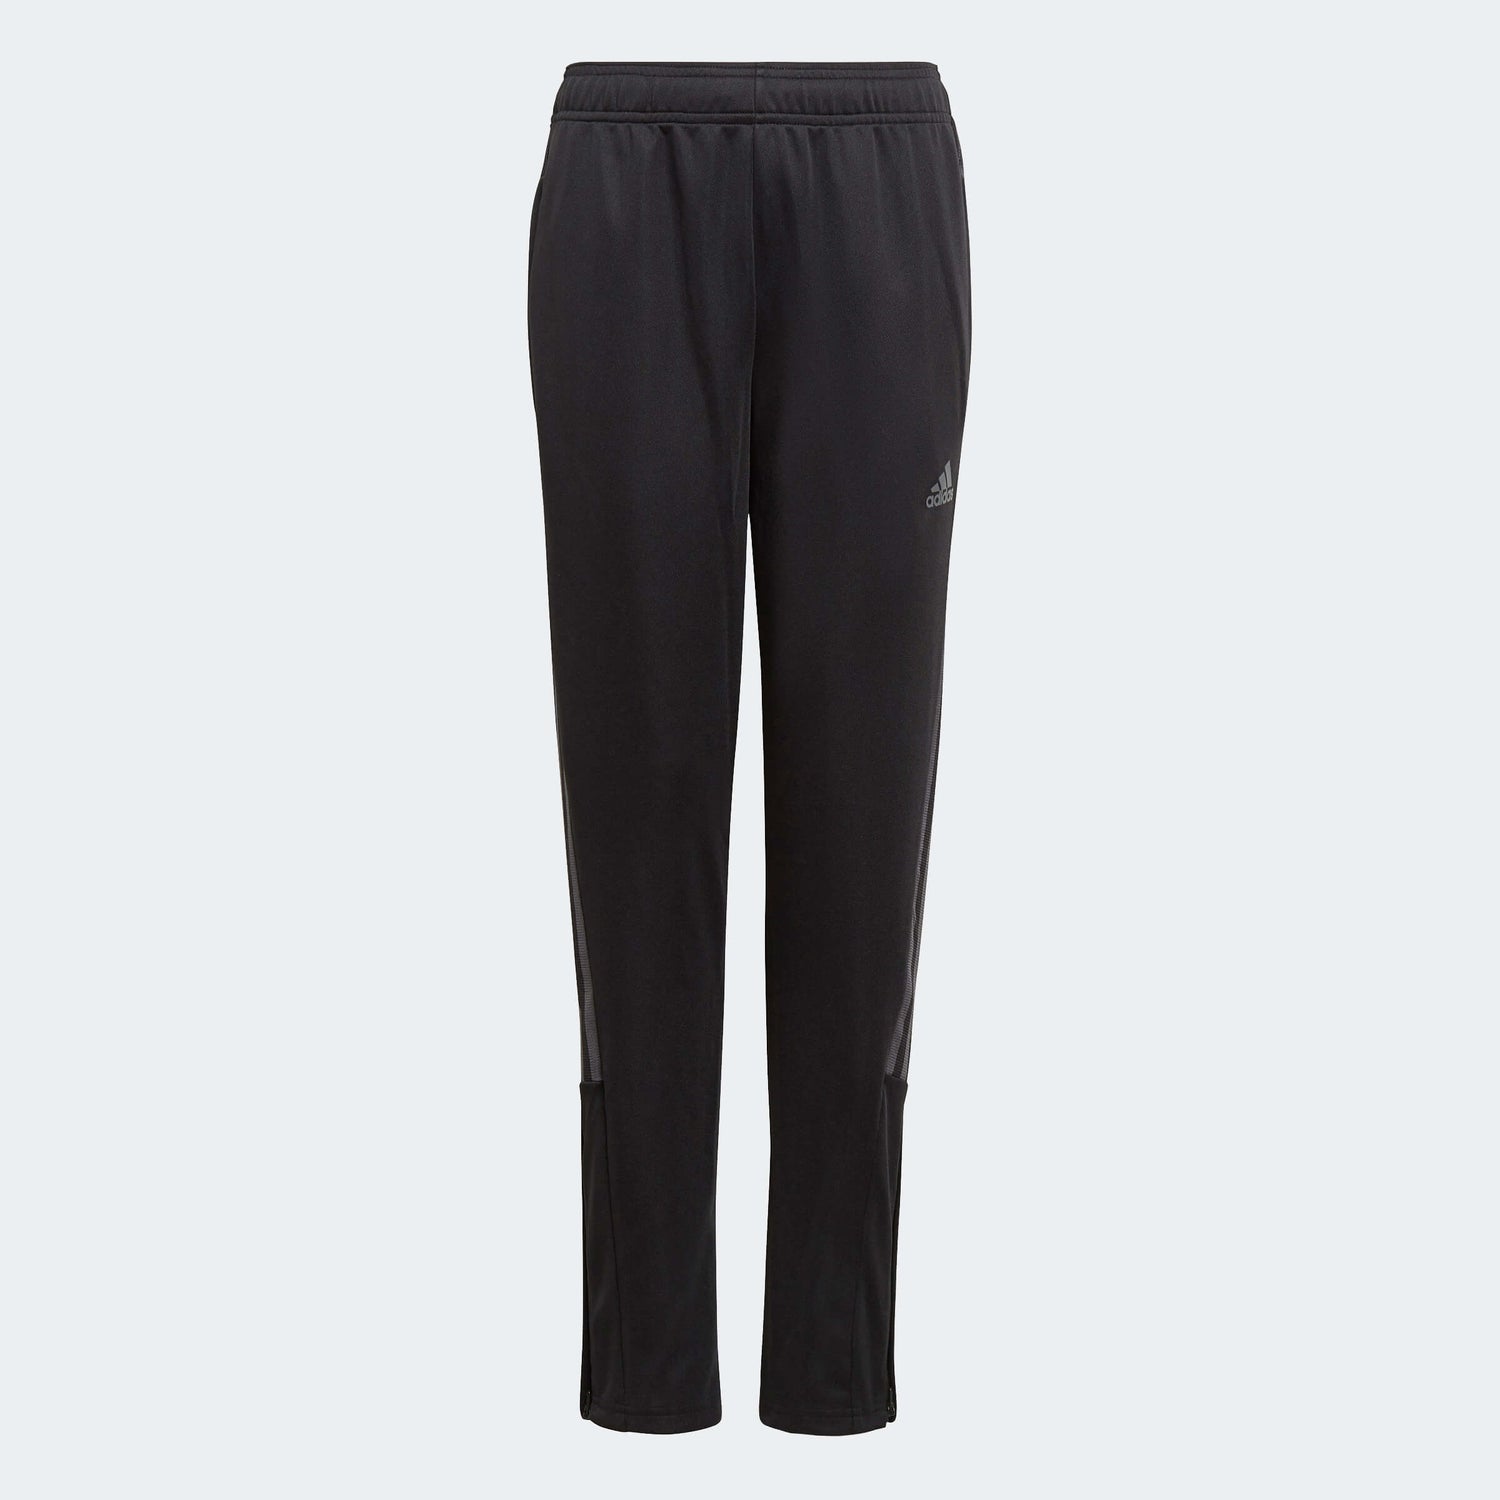 Adidas Tiro Youth Track Pants Black-Grey (Front)